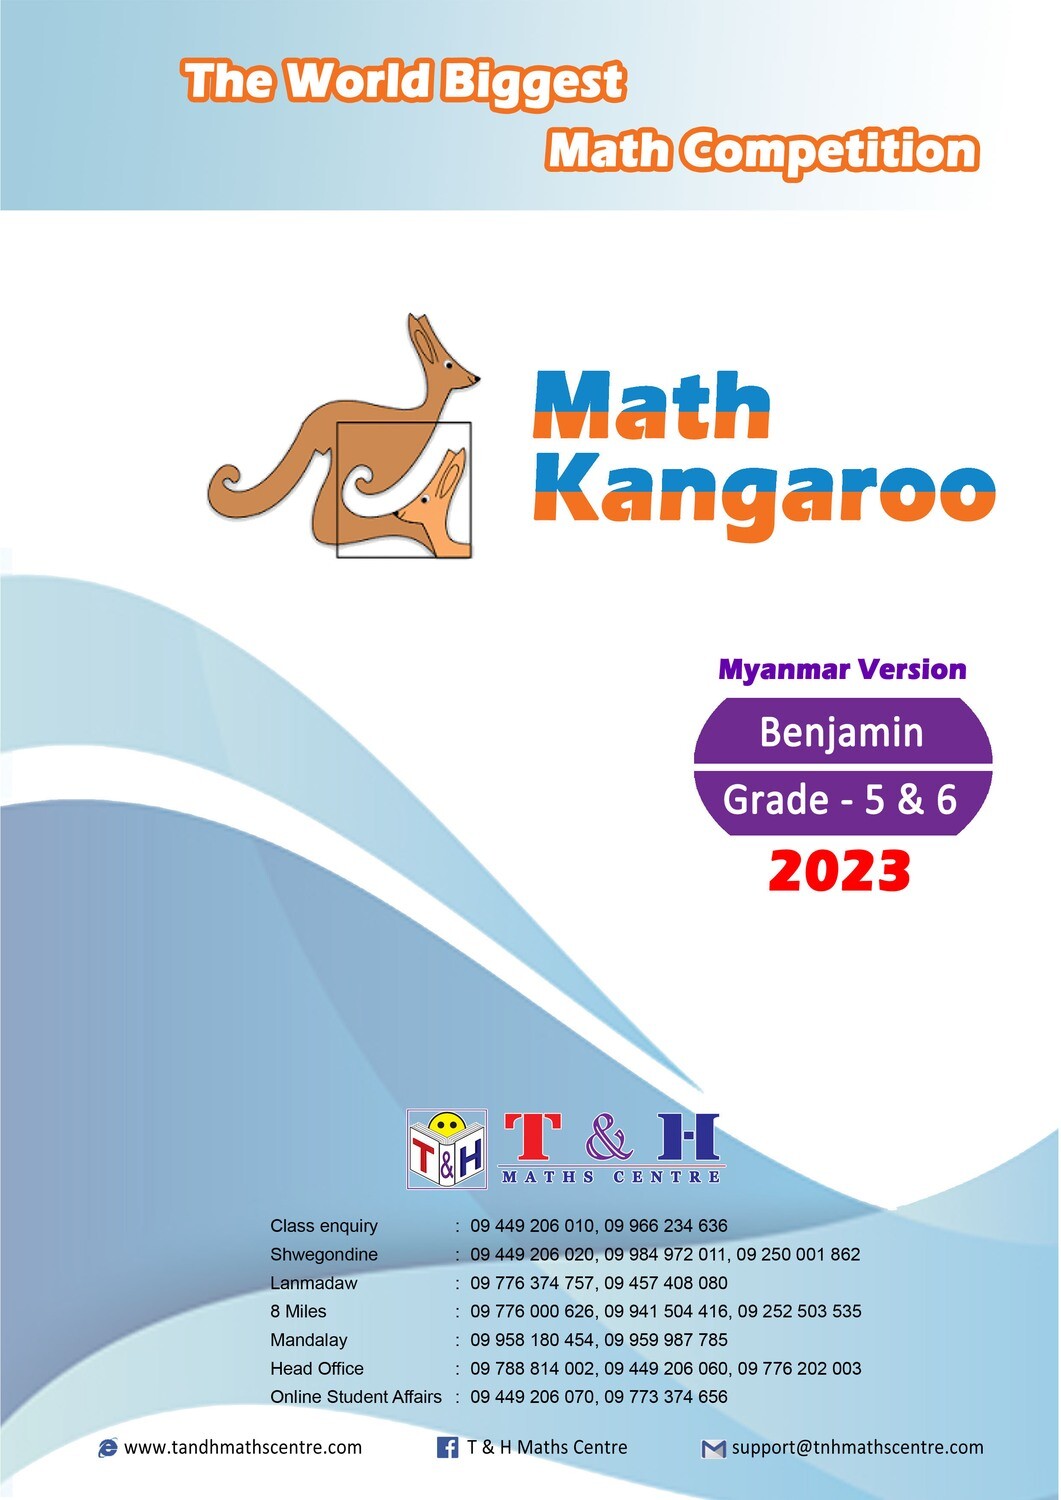 Kangaroo (Benjamin) Grade 5 & 6 (2023)